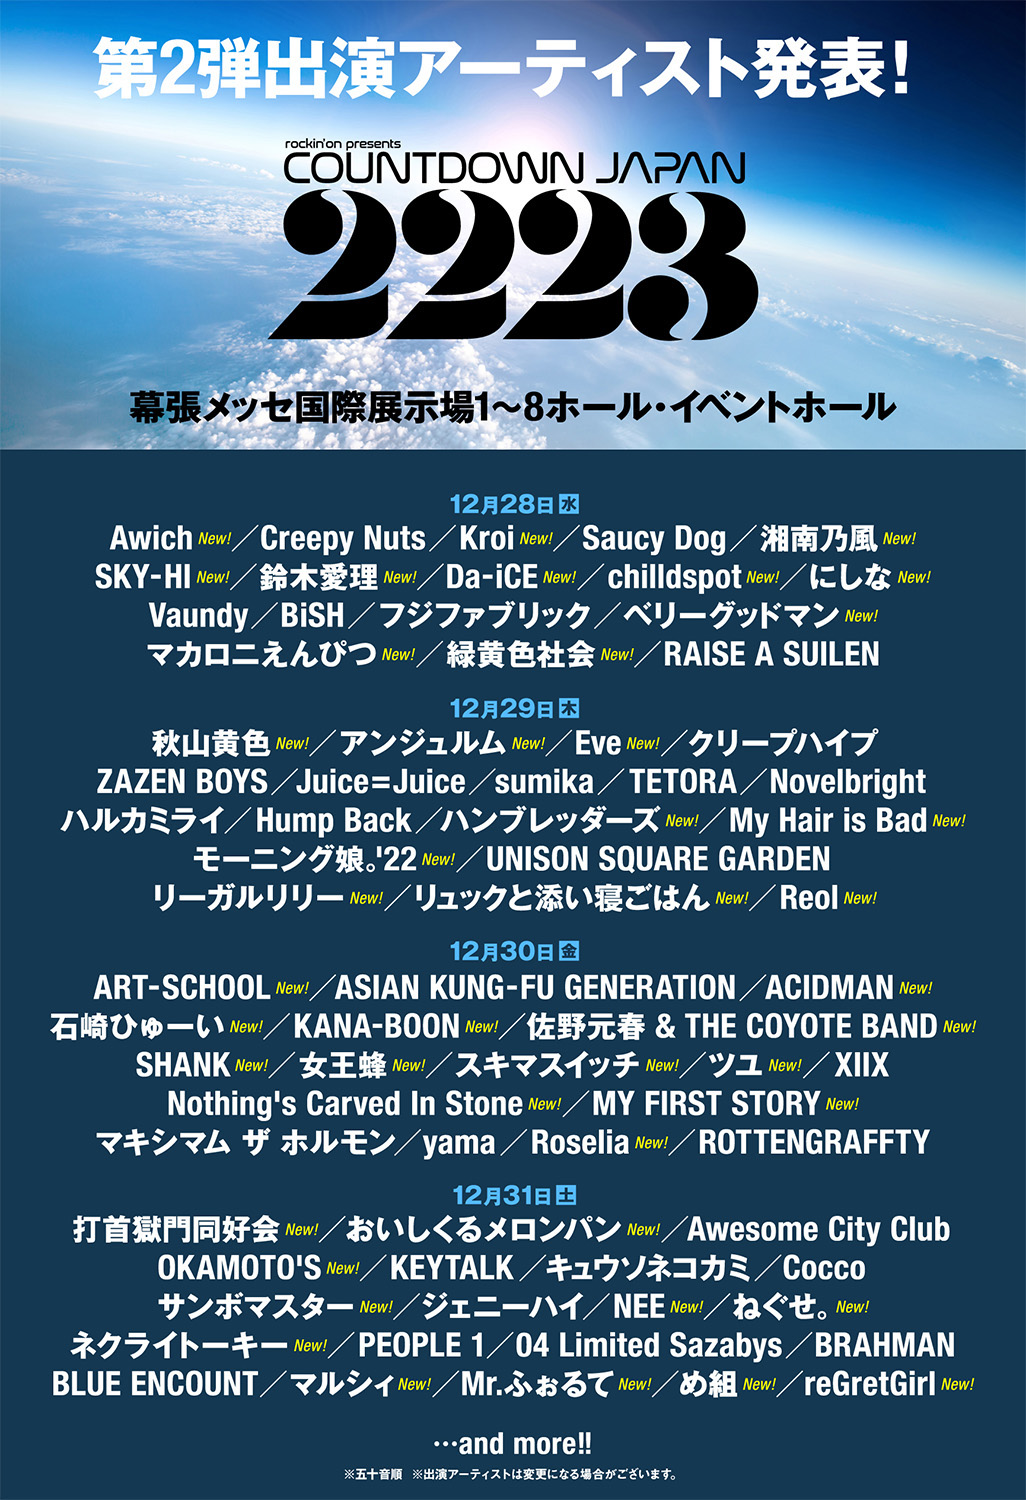 『COUNTDOWN JAPAN 22/23』、第2弾出演アーティストでマカえん、SKY-HI、モーニング娘。’22ら43組発表